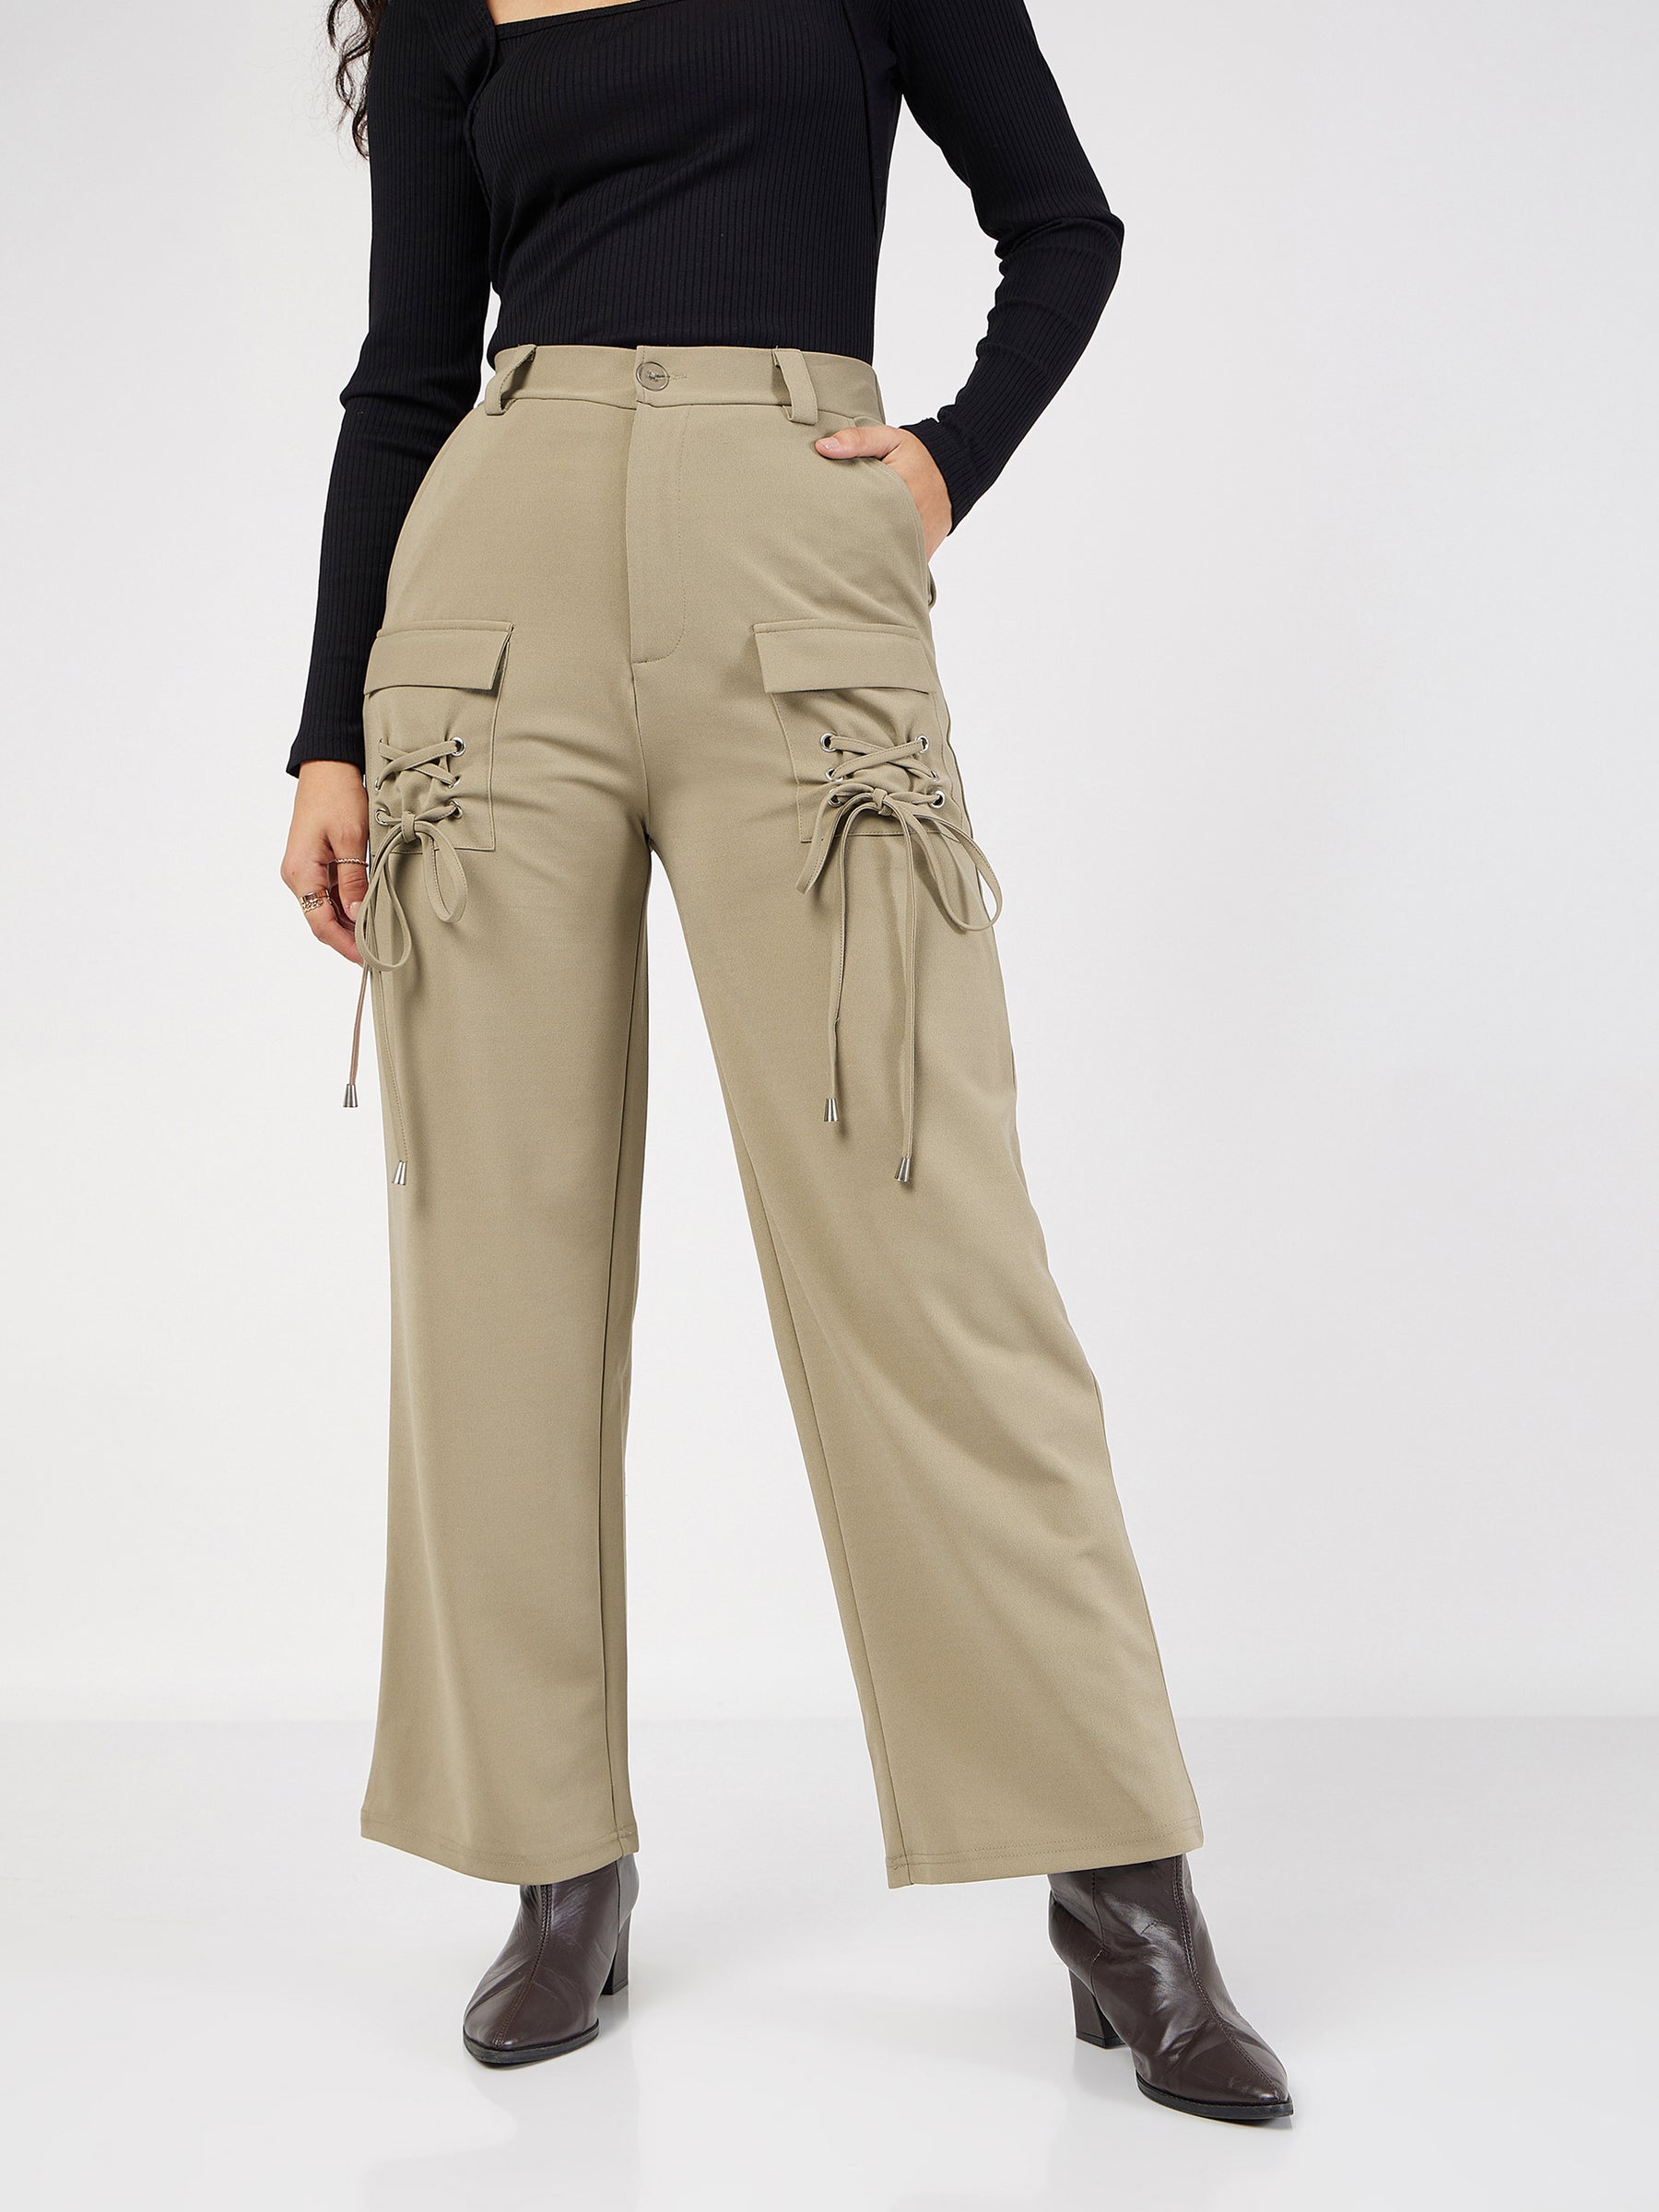 Khaki Cargo Pocket Detail Pants, Pants